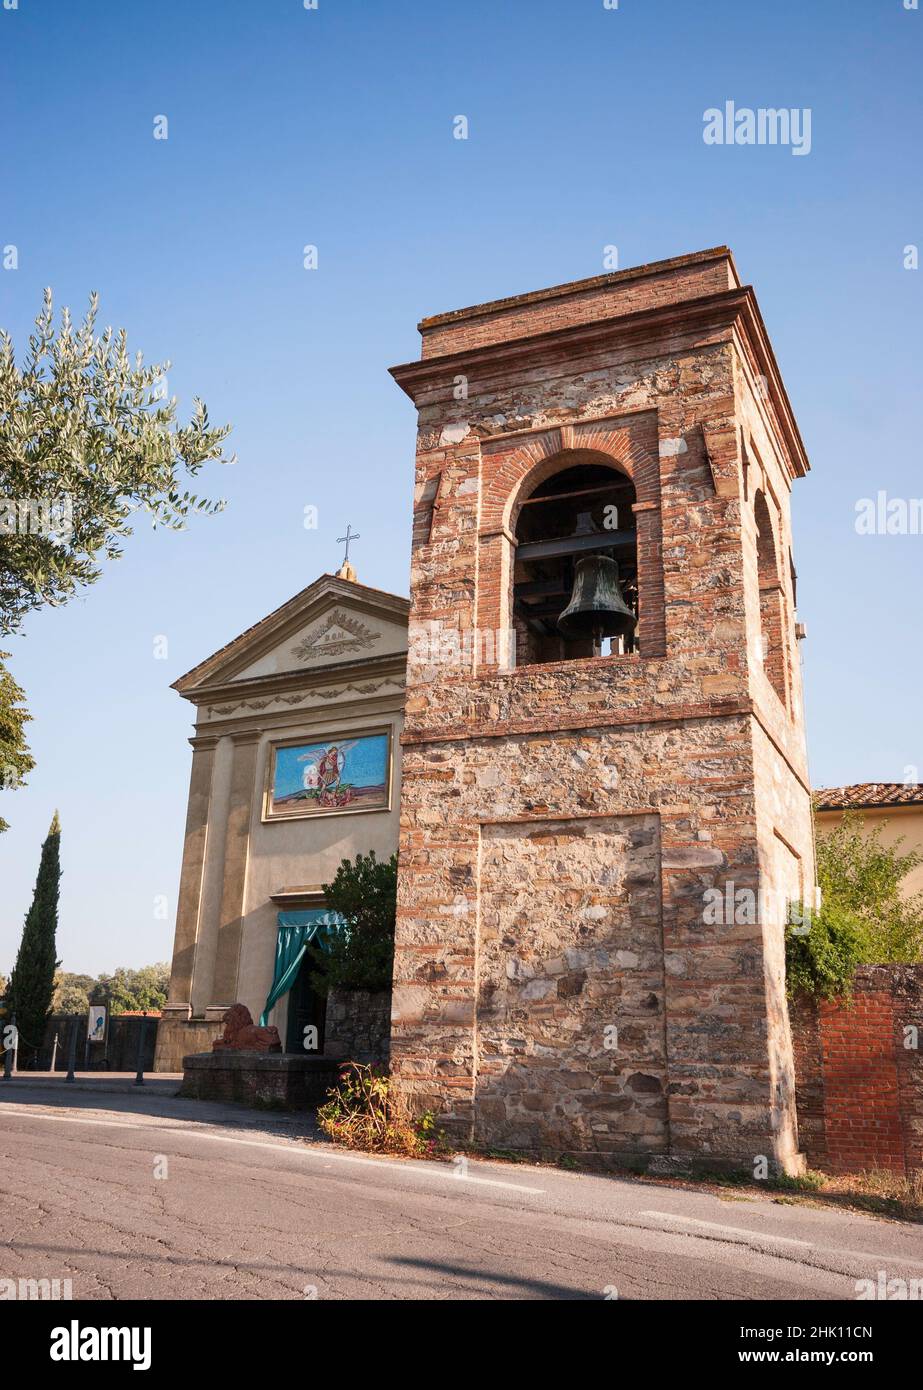 Der Glockenturm oder campanile der Kirche San Michele Arcangelo in Colognora, Toskana, Italien Stockfoto